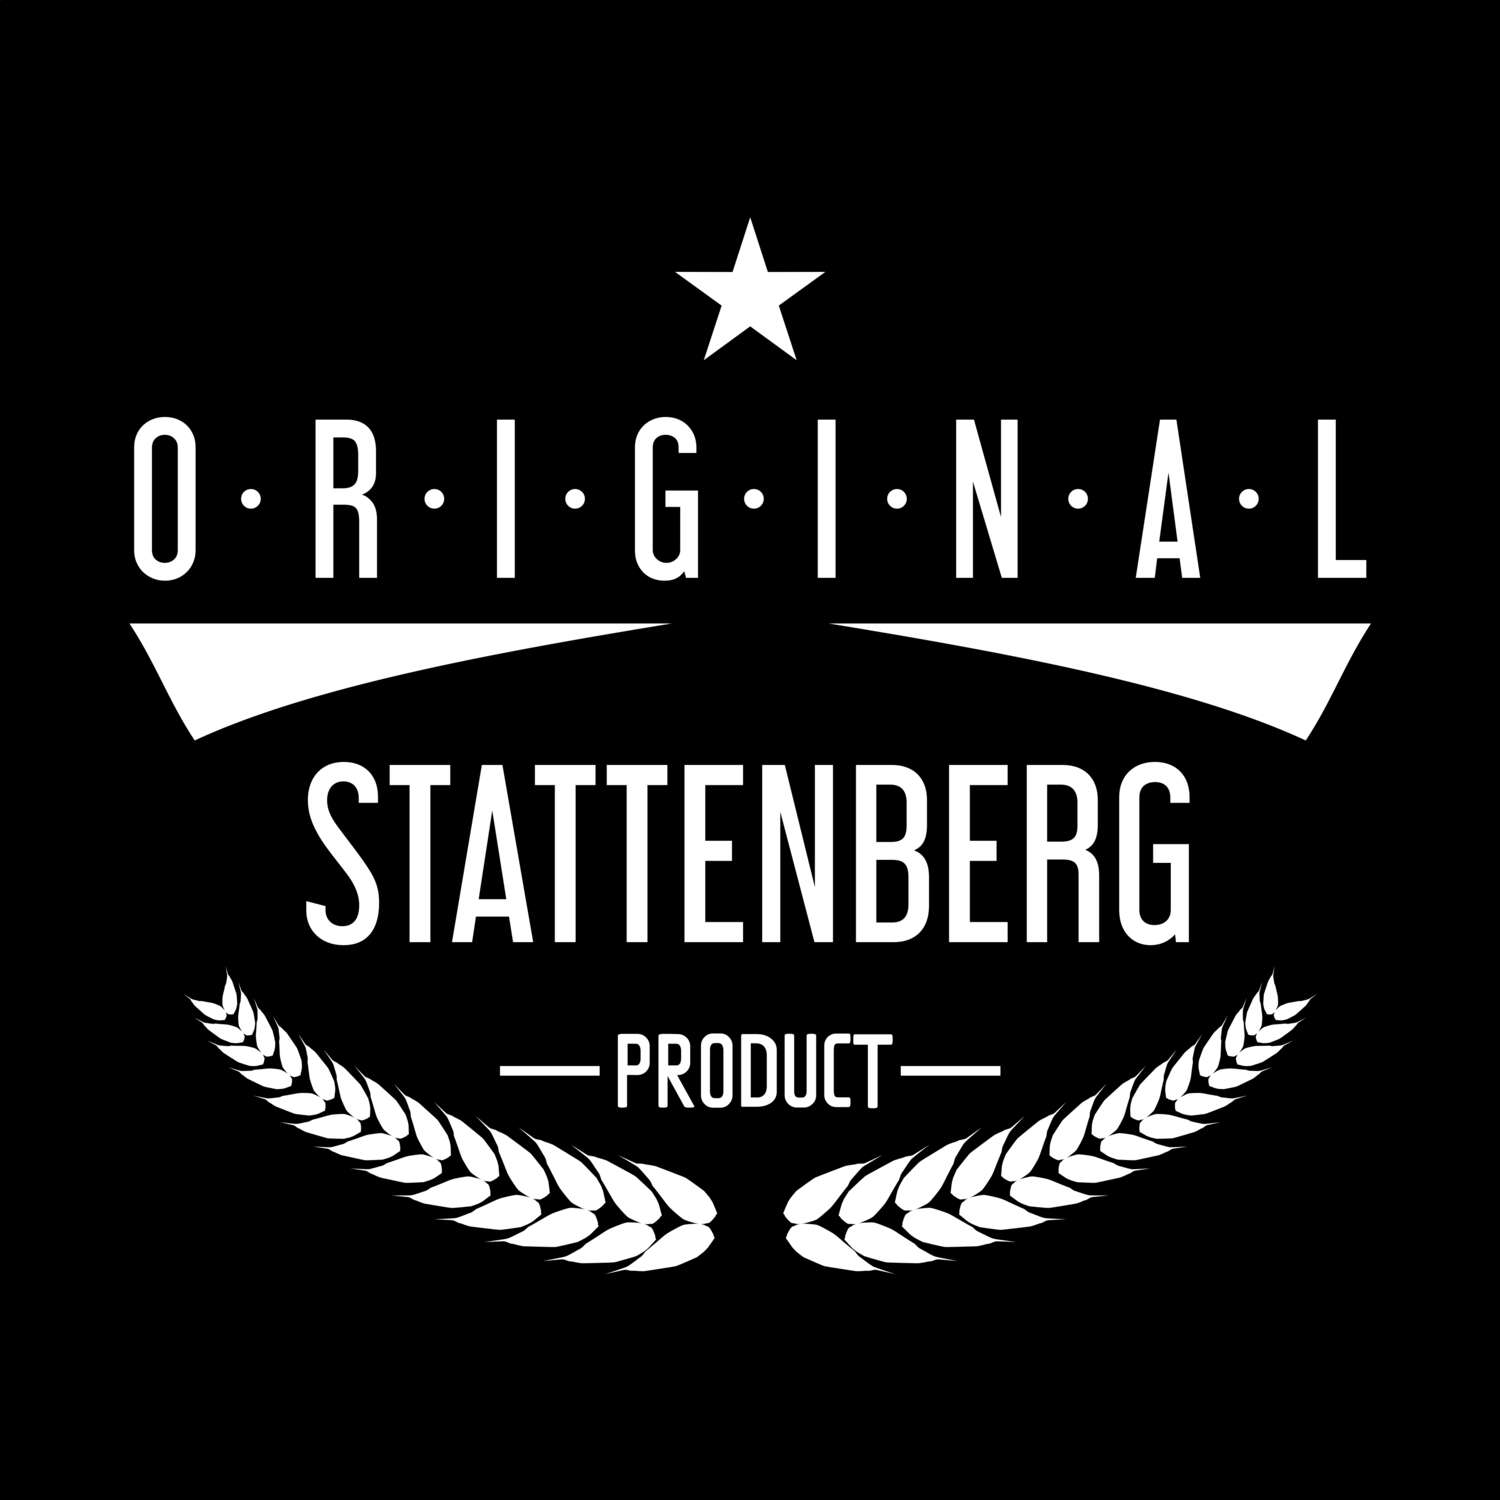 Stattenberg T-Shirt »Original Product«